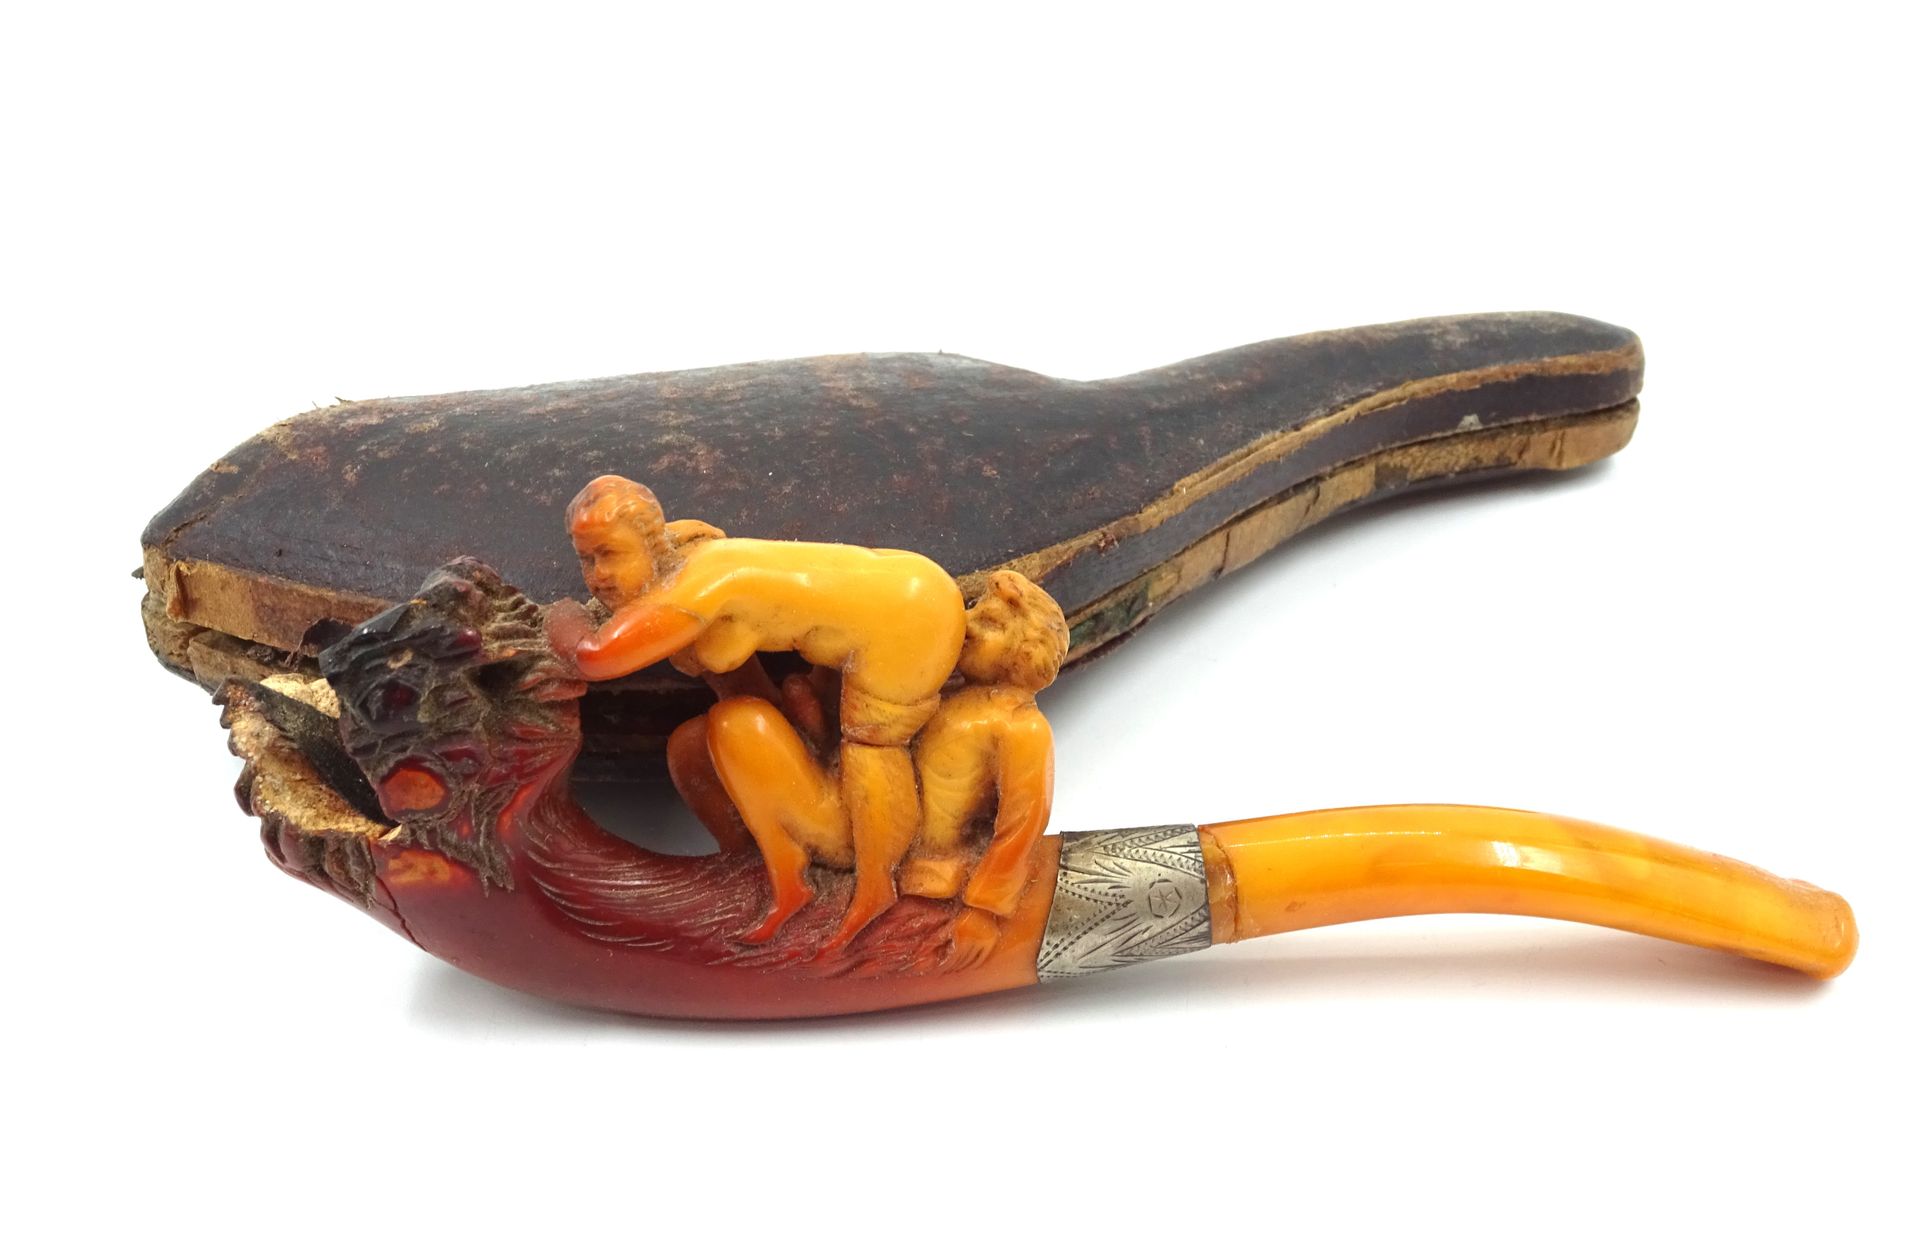 Null 一个琥珀烟斗，雕刻有色情场景（烟斗断裂后又粘合在一起，缺失）。长 13 厘米。装在盒子里。